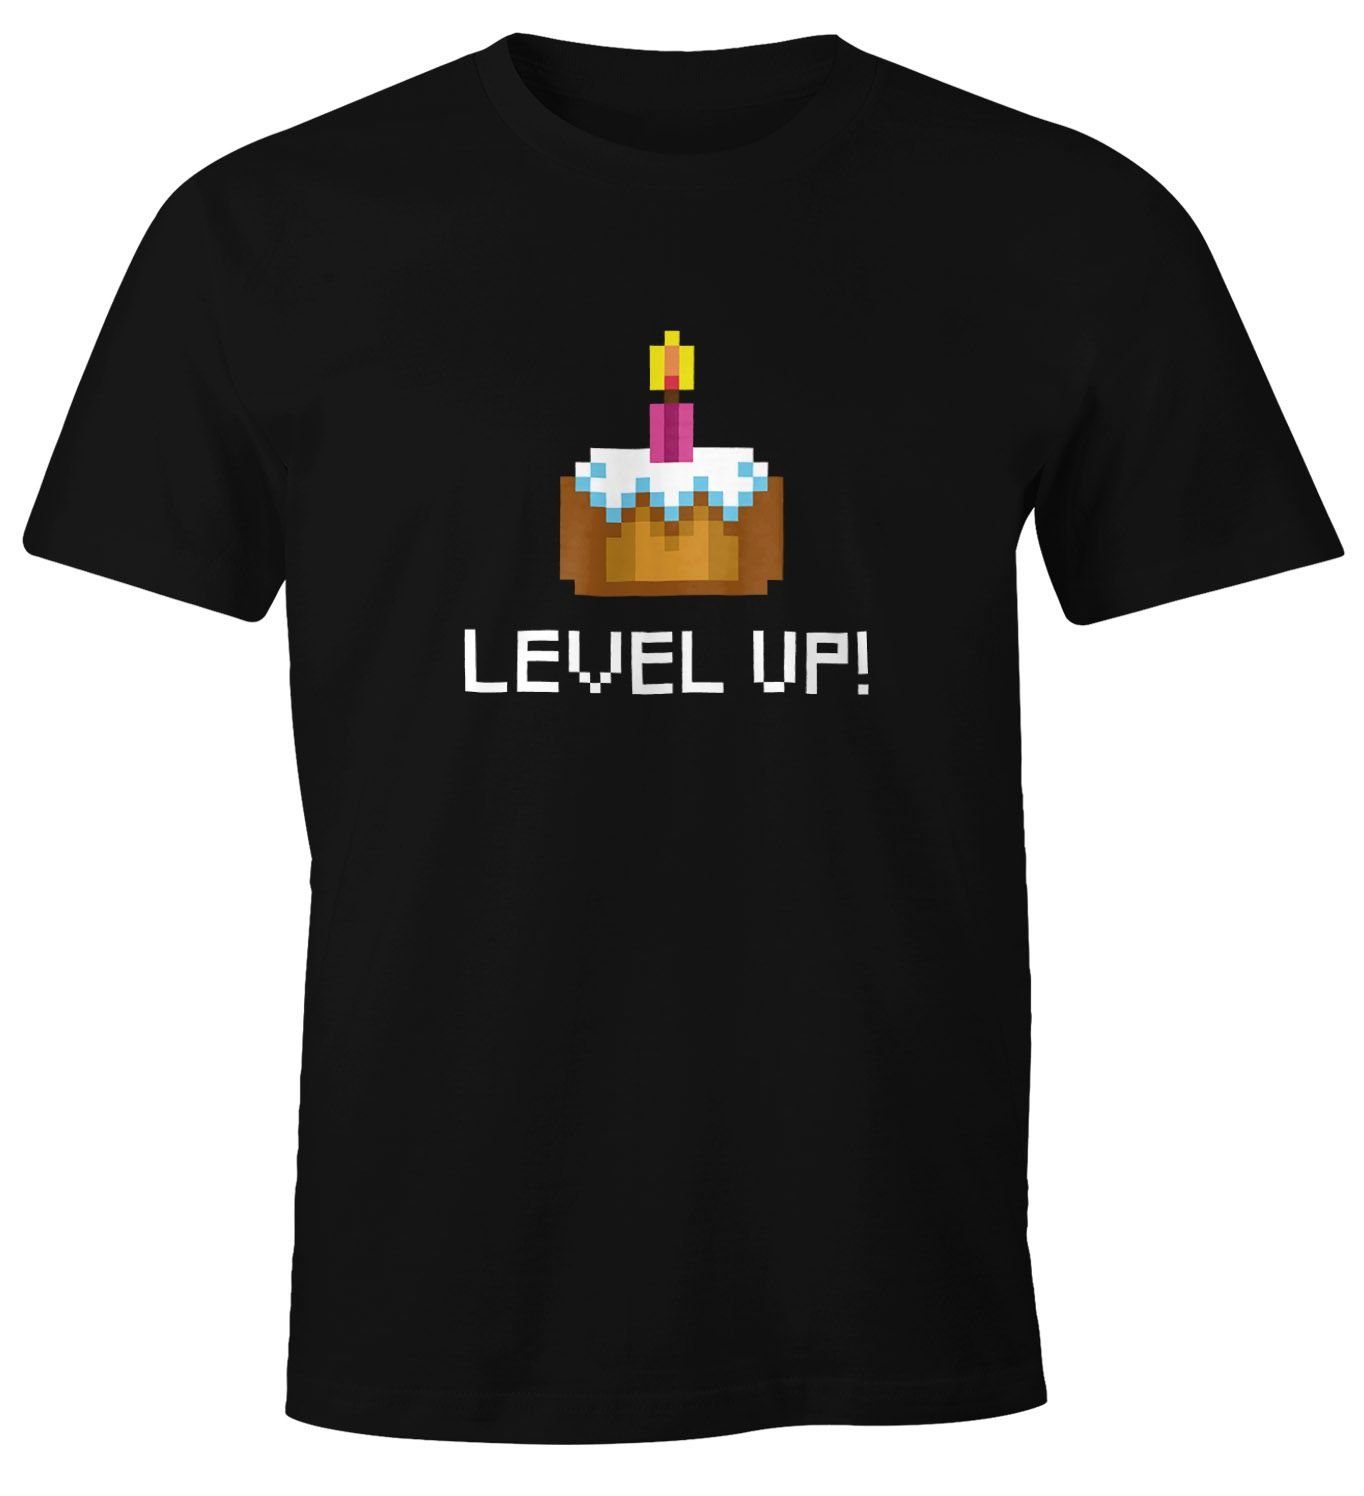 MoonWorks Print-Shirt Herren T-Shirt Geburtstag Level Up Pixel-Torte Retro Gamer Pixelgrafik Geschenk Arcade Fun-Shirt Moonworks® mit Print schwarz